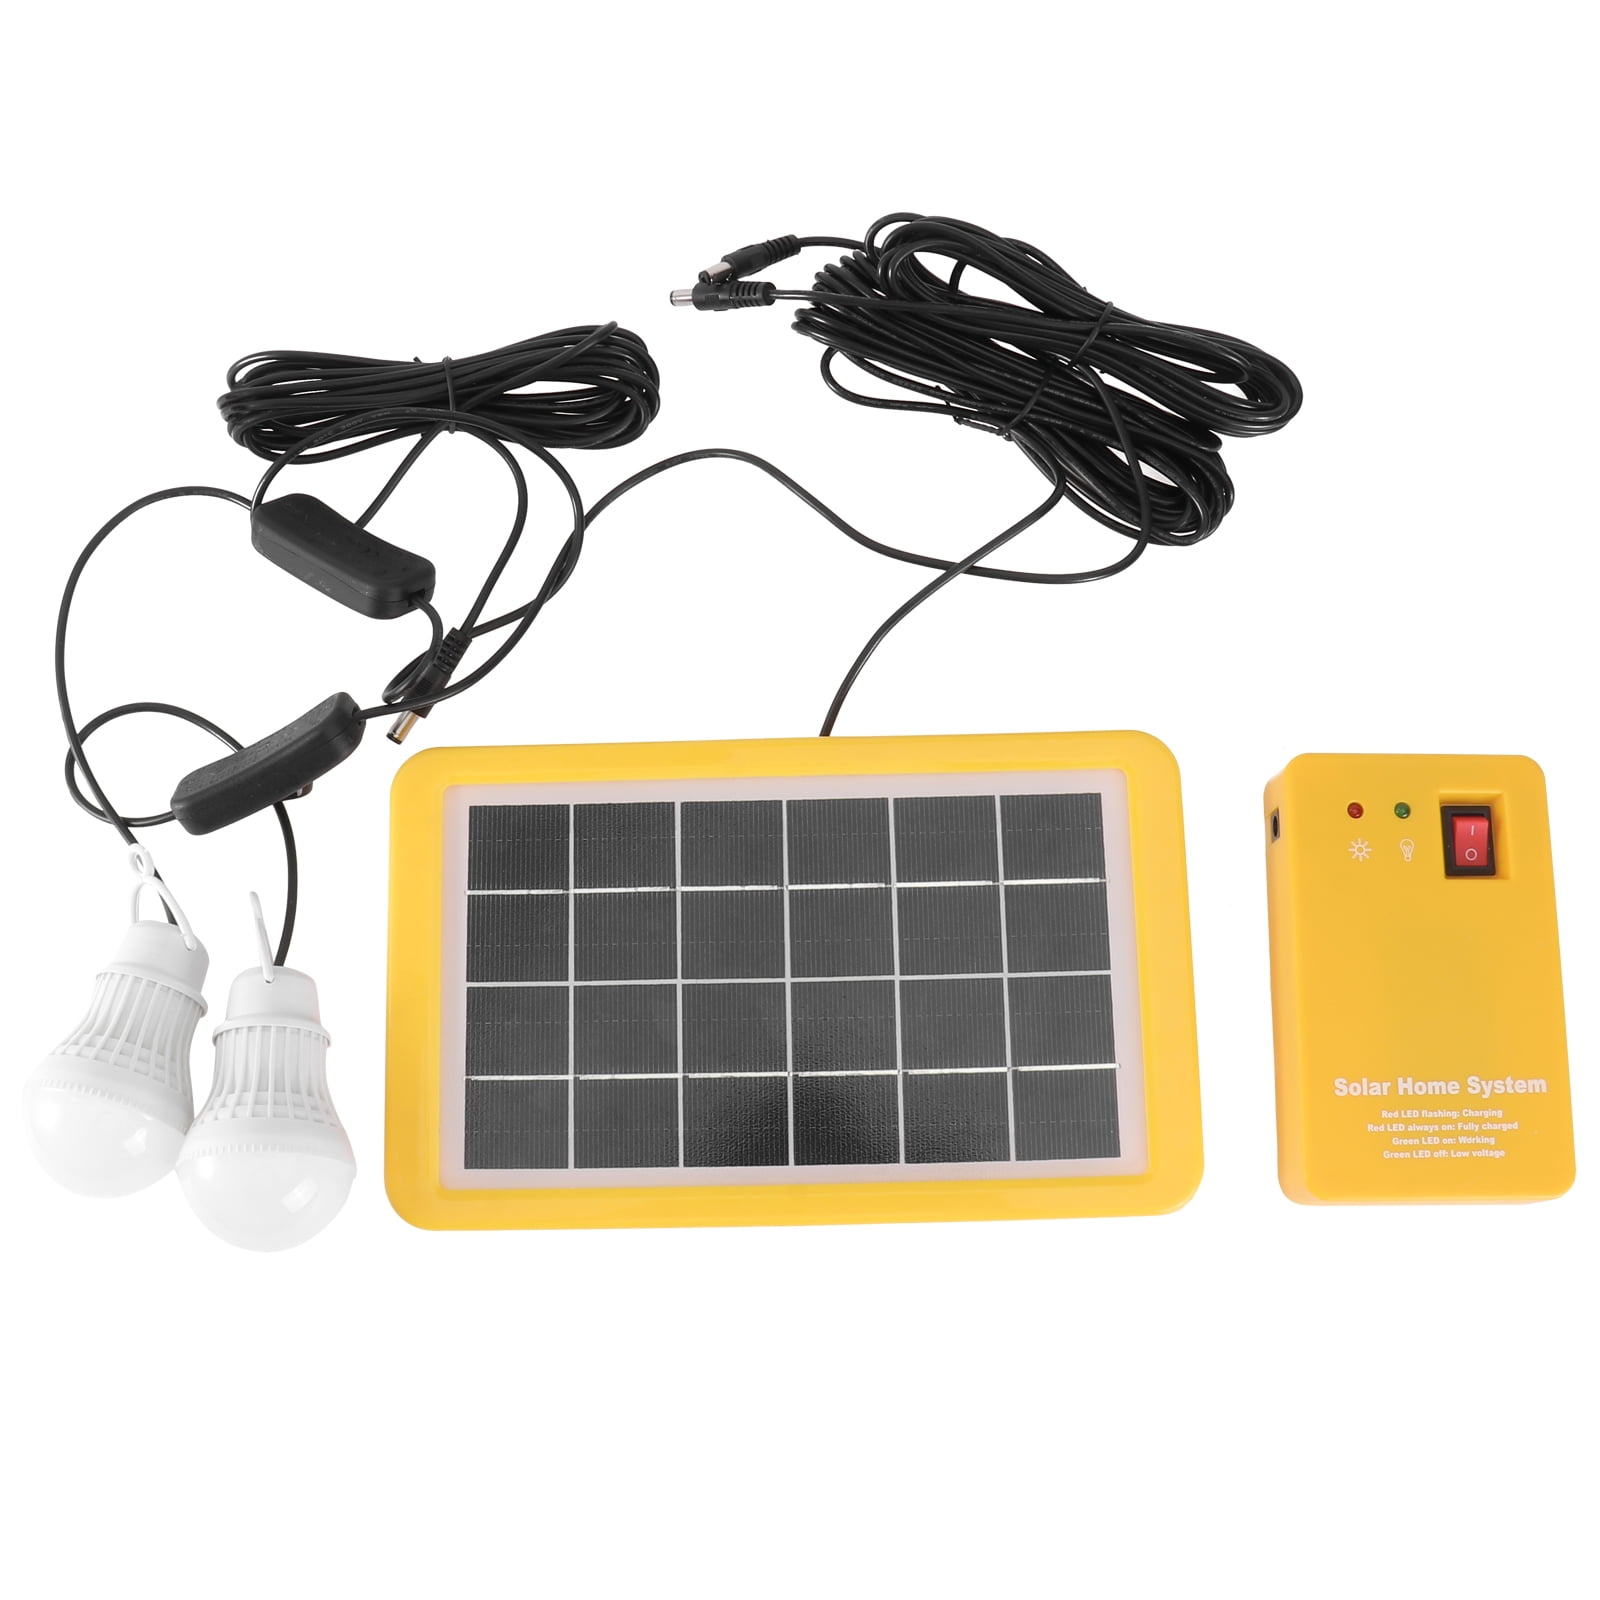 Outdoor Portable Solar Home Kit DC Solar Panel Power Generator LED Light Bulbs Solar Camping Lighting System - Walmart.com